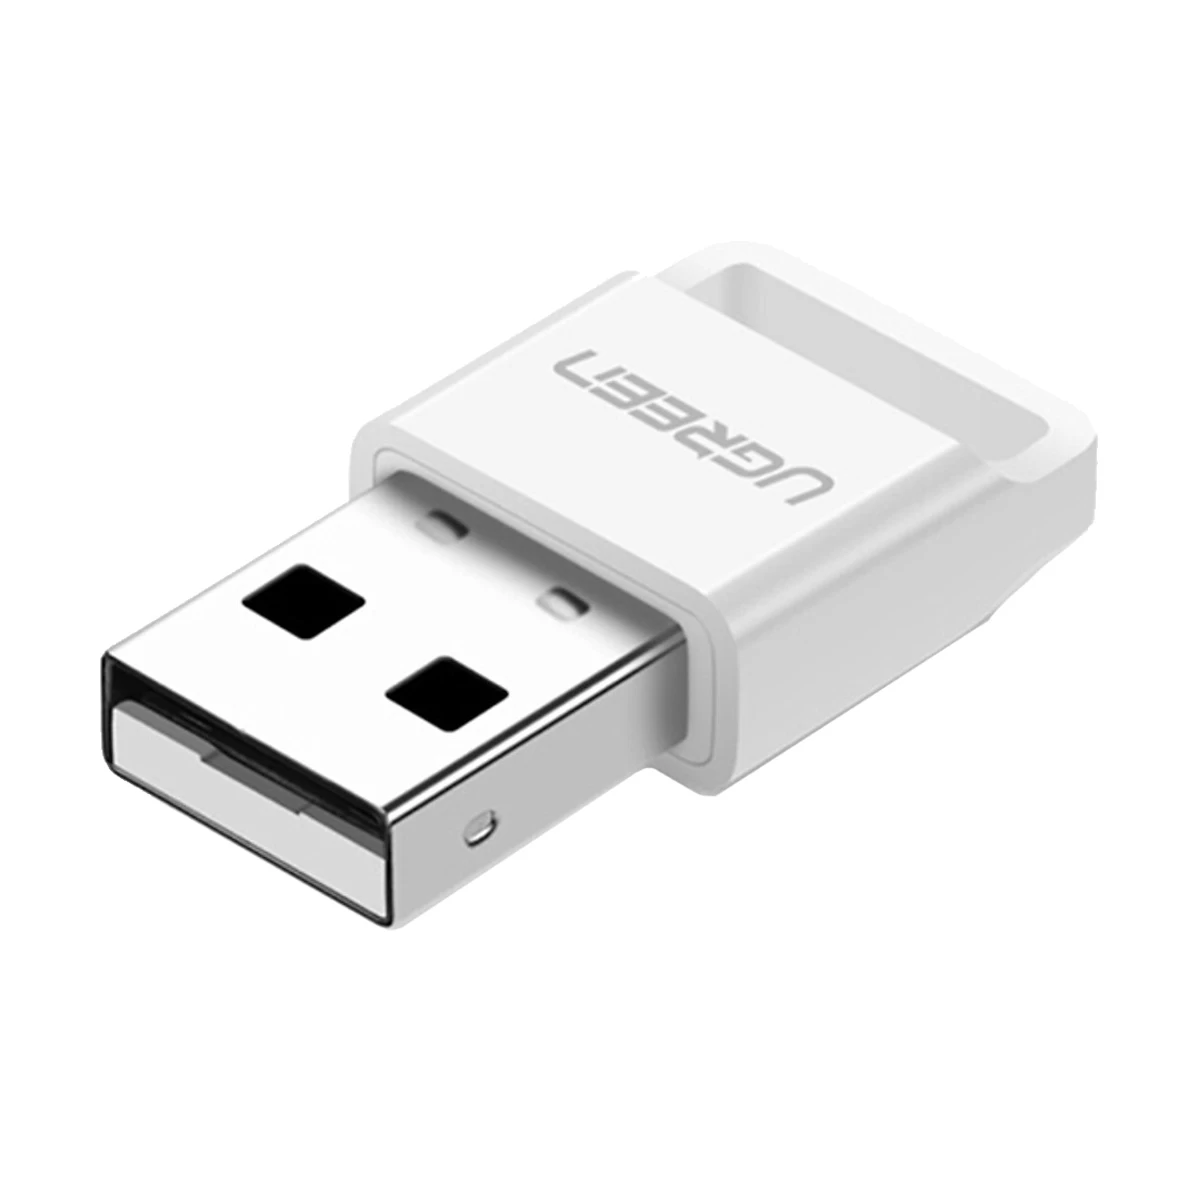 Ugreen USB Bluetooth 4.0 White Adapter # 30443